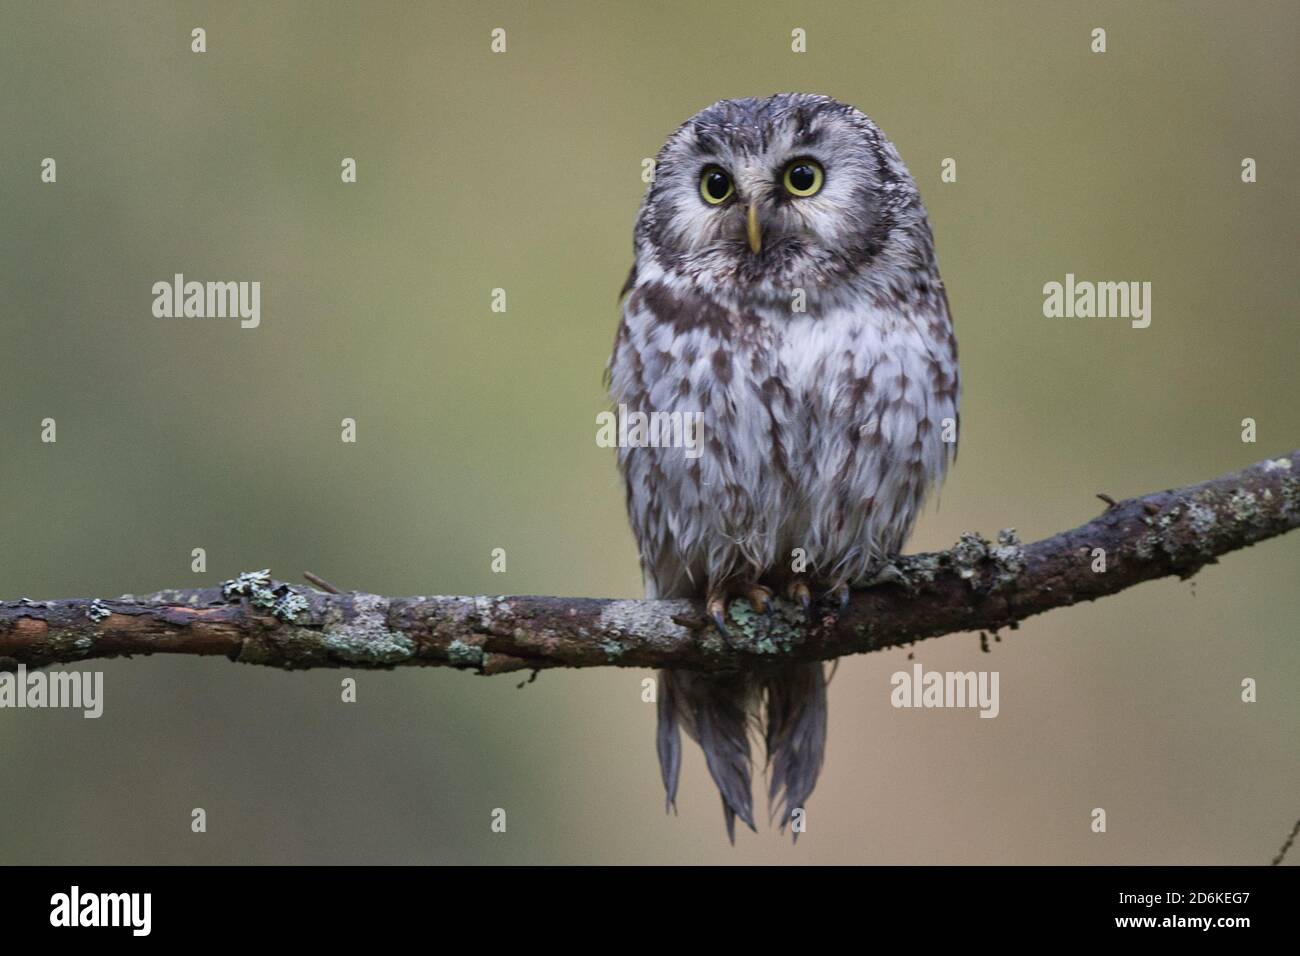 Eule, Kauz, Vogel, Bird, Aegolius funereus, Rauhfusskauz, Boreal owl, owl,  predator, hunter, fauna Stock Photo - Alamy